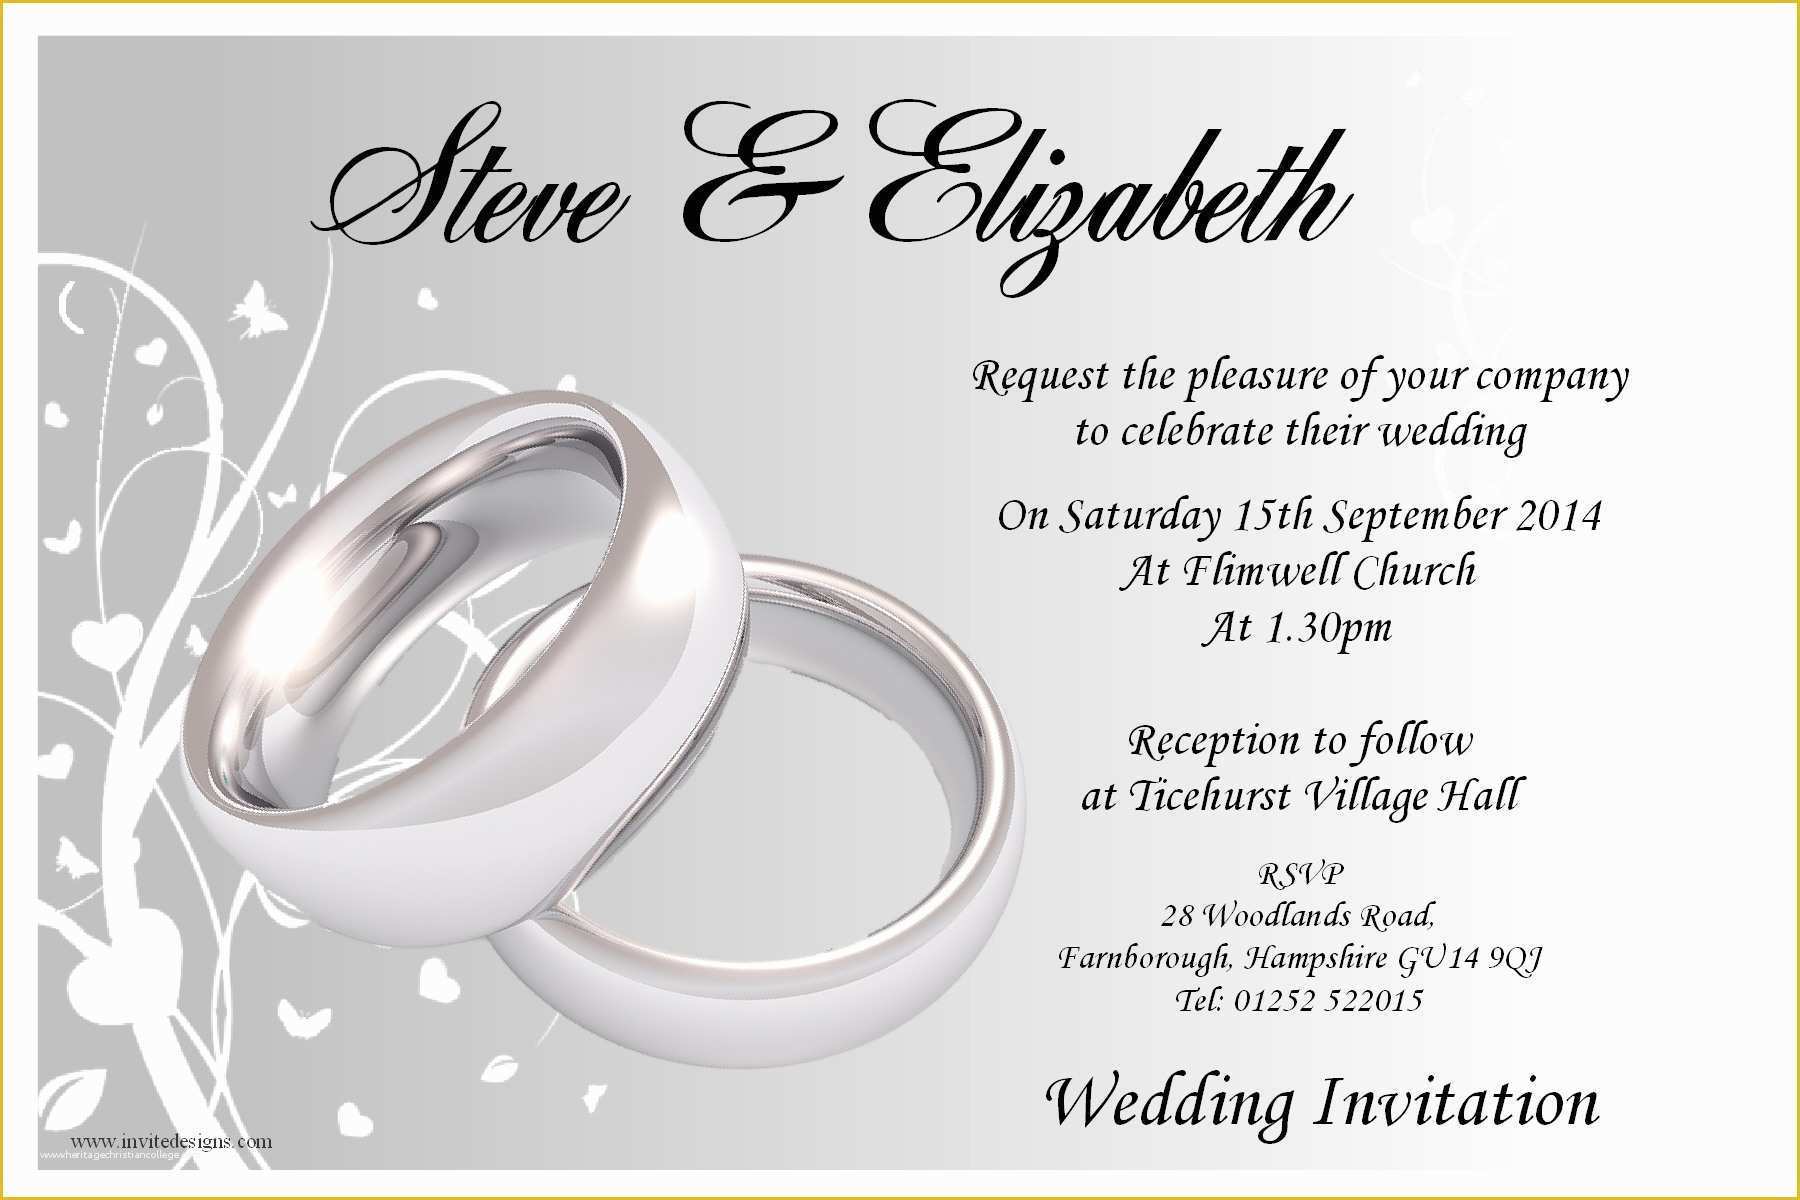 Black and White Invitation Templates Free Download Of Wedding Reception Invitation Templates Free Receipt